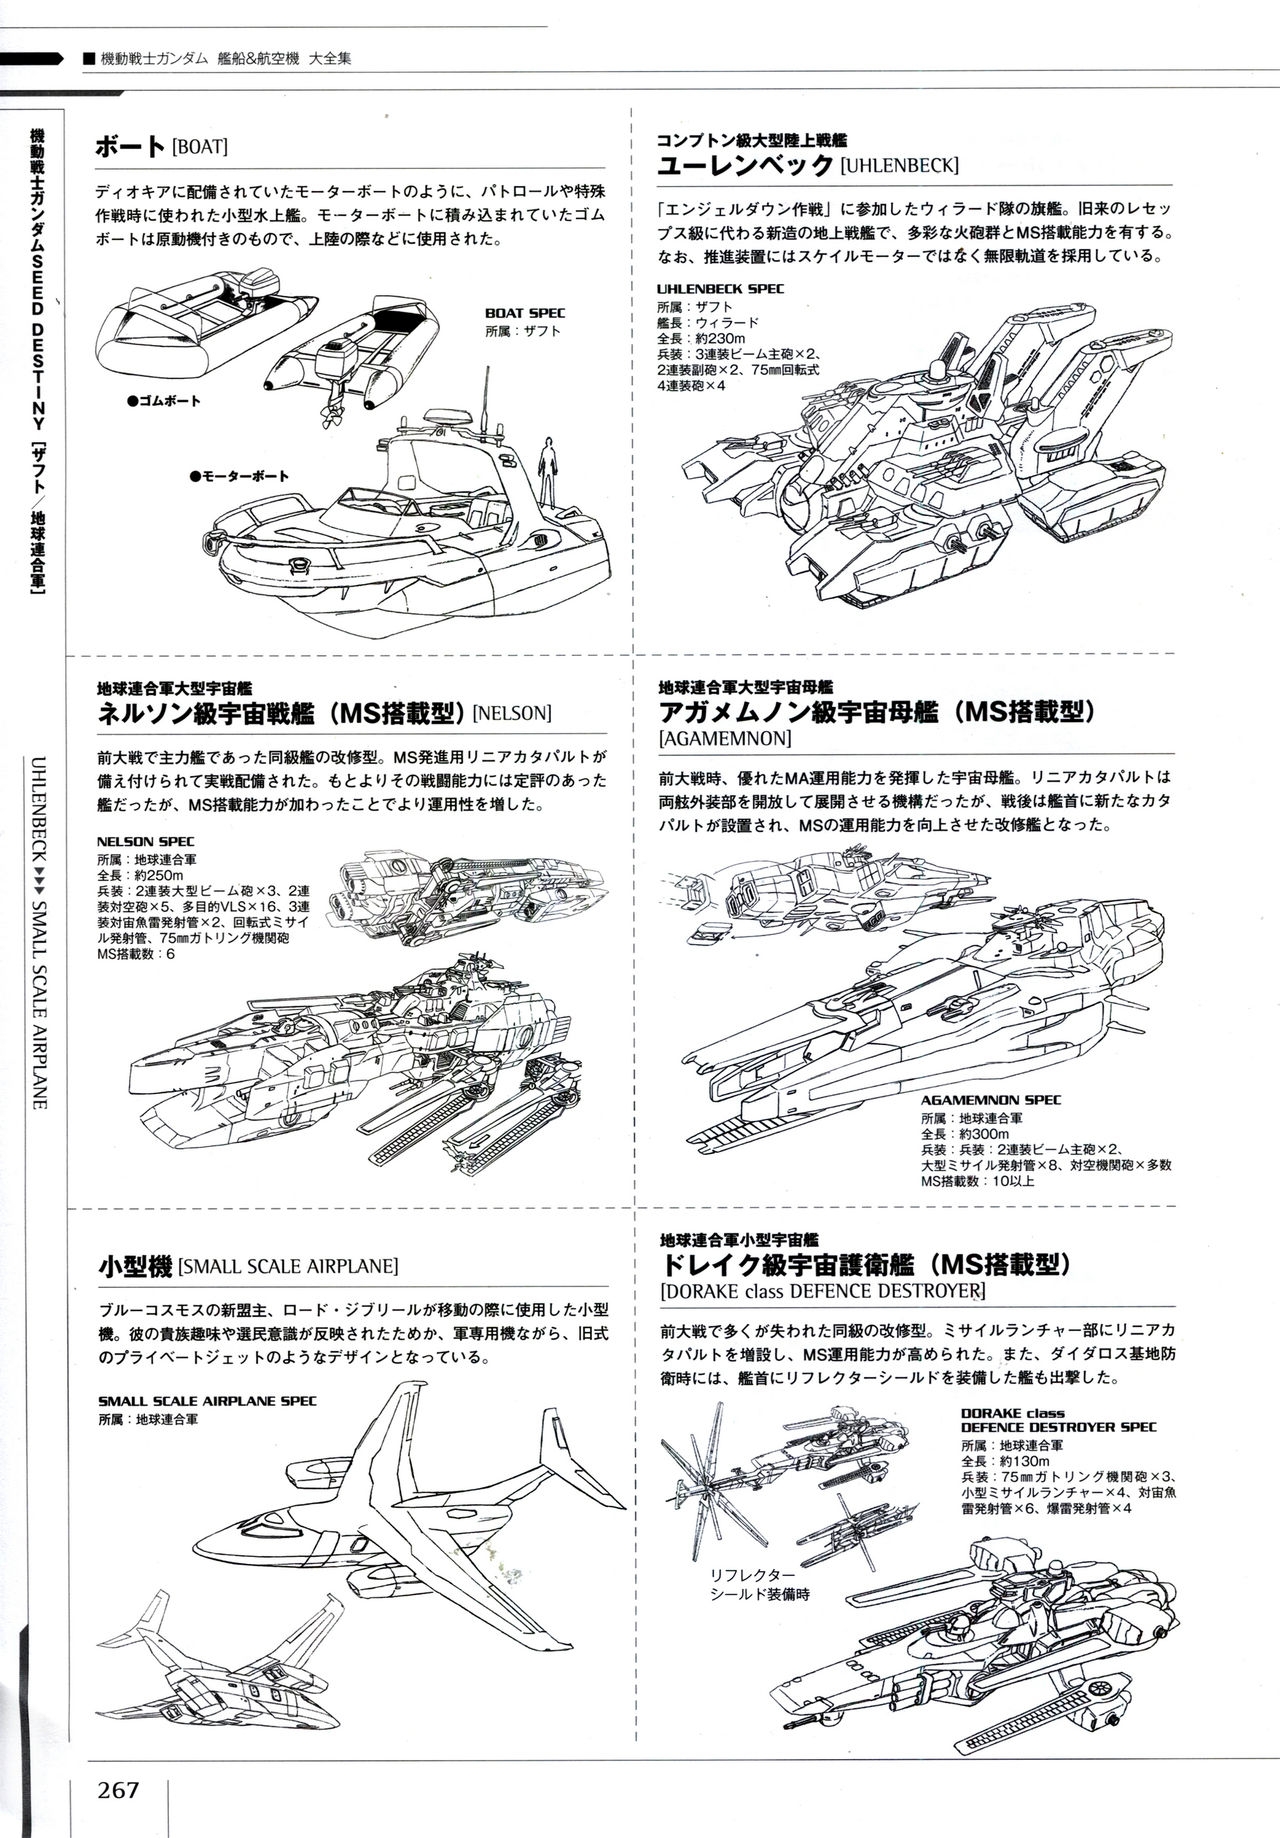 Mobile Suit Gundam - Ship & Aerospace Plane Encyclopedia - Revised Edition 272